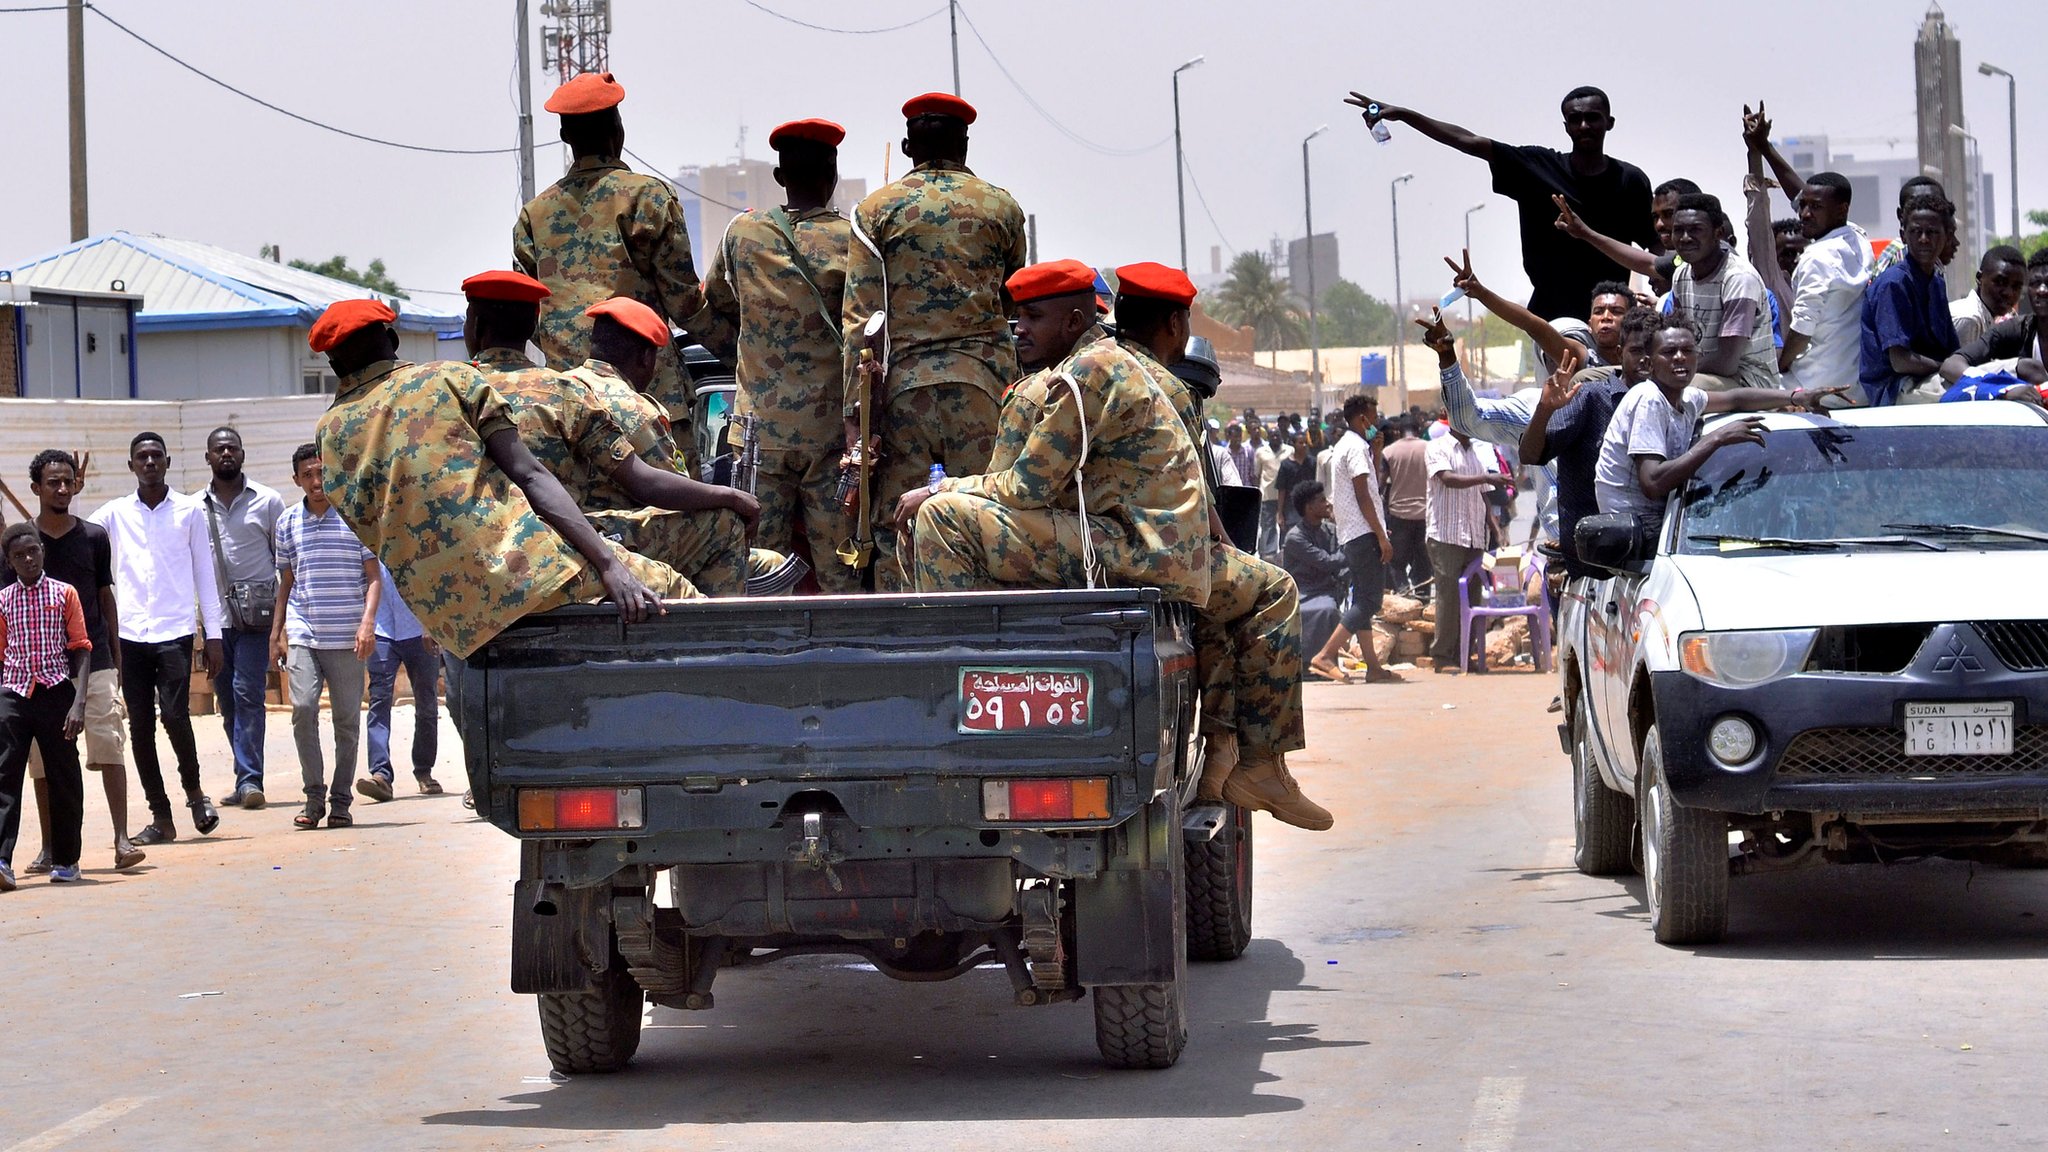 Omar al-Bashir: Sudan military coup topples ruler after protests - BBC News